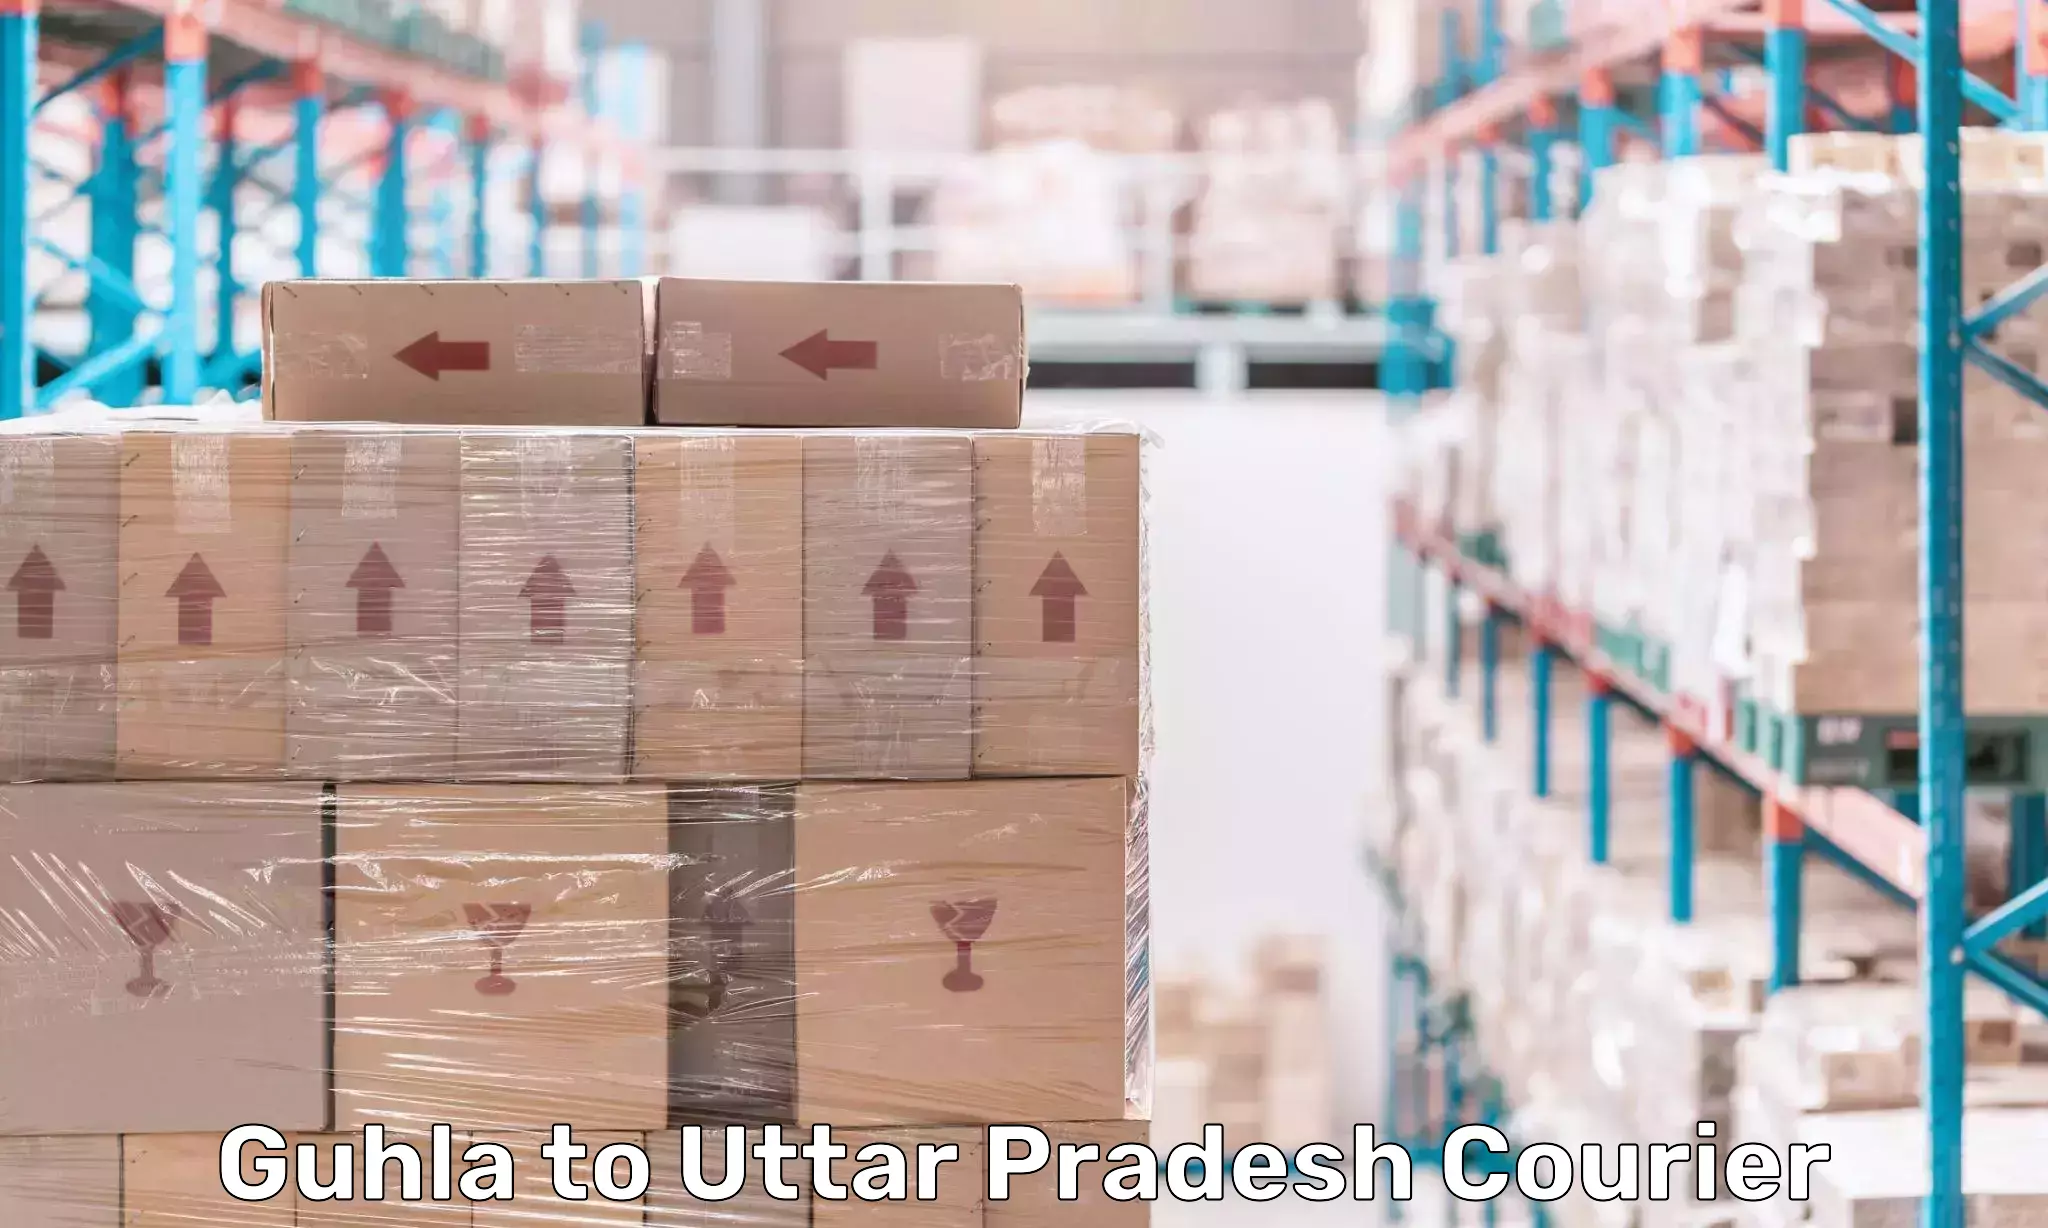 Advanced courier platforms Guhla to Uttar Pradesh